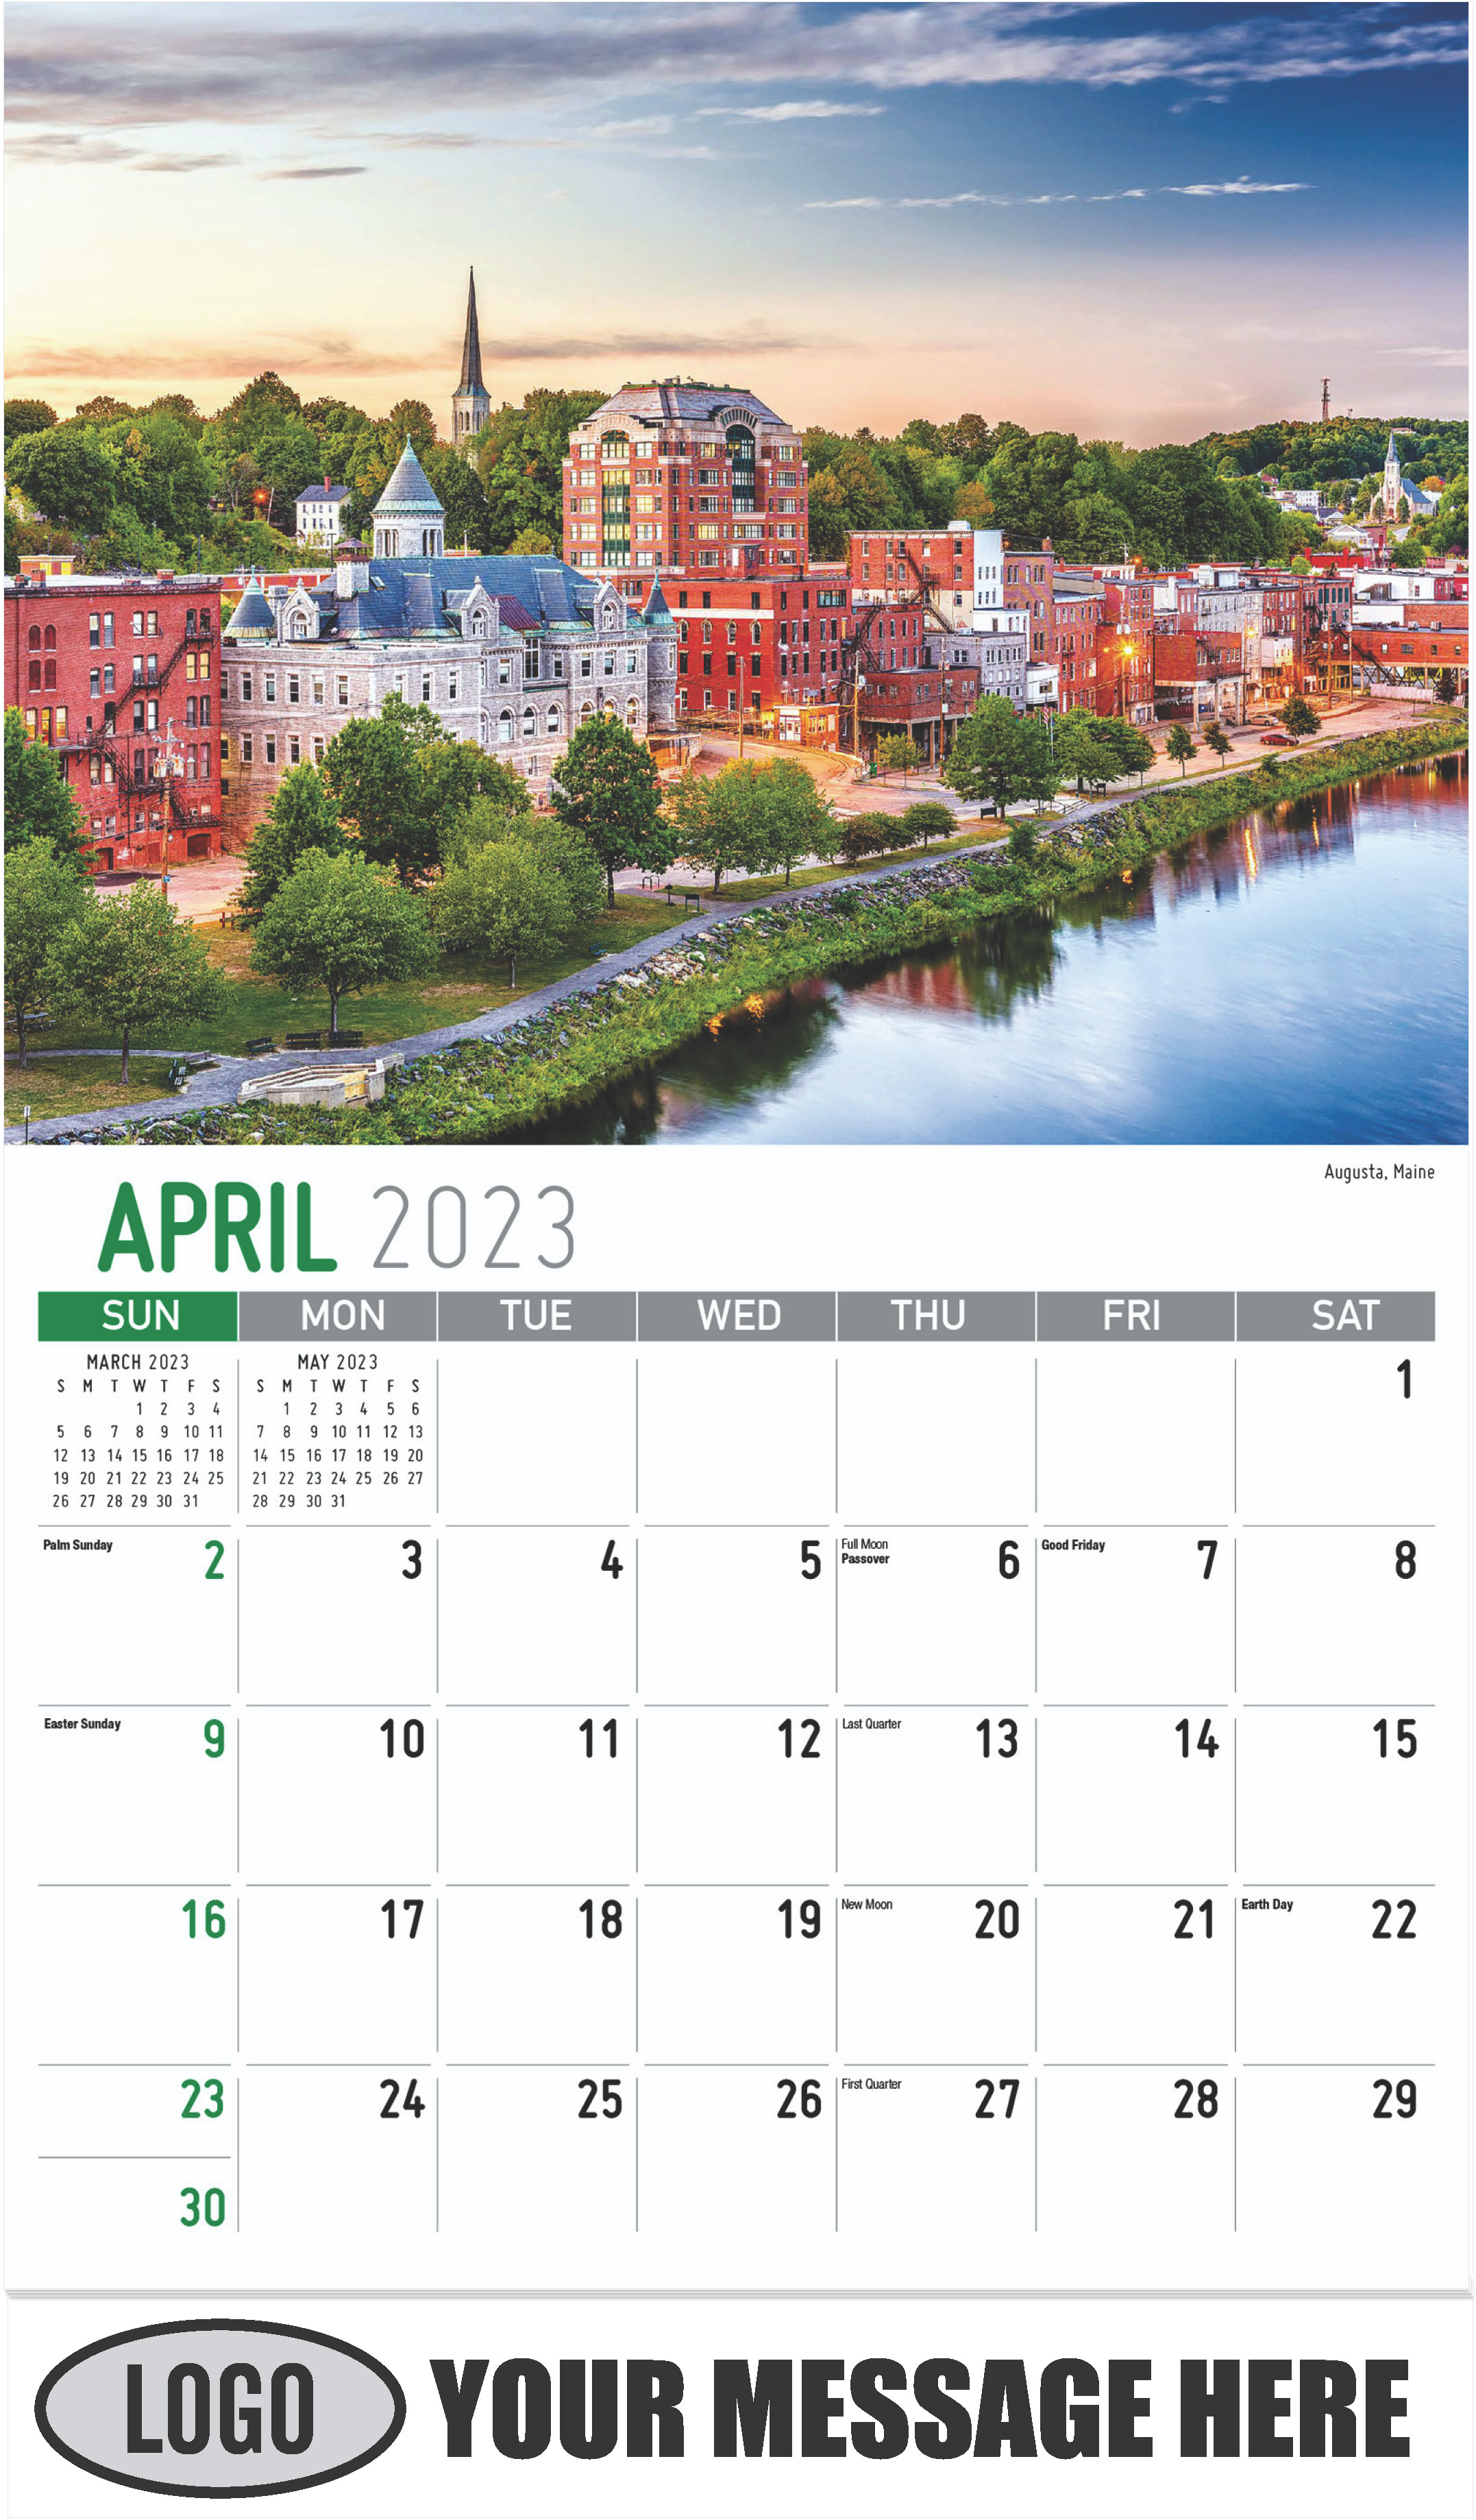 Augusta, Maine - April - Scenes of New England 2023 Promotional Calendar